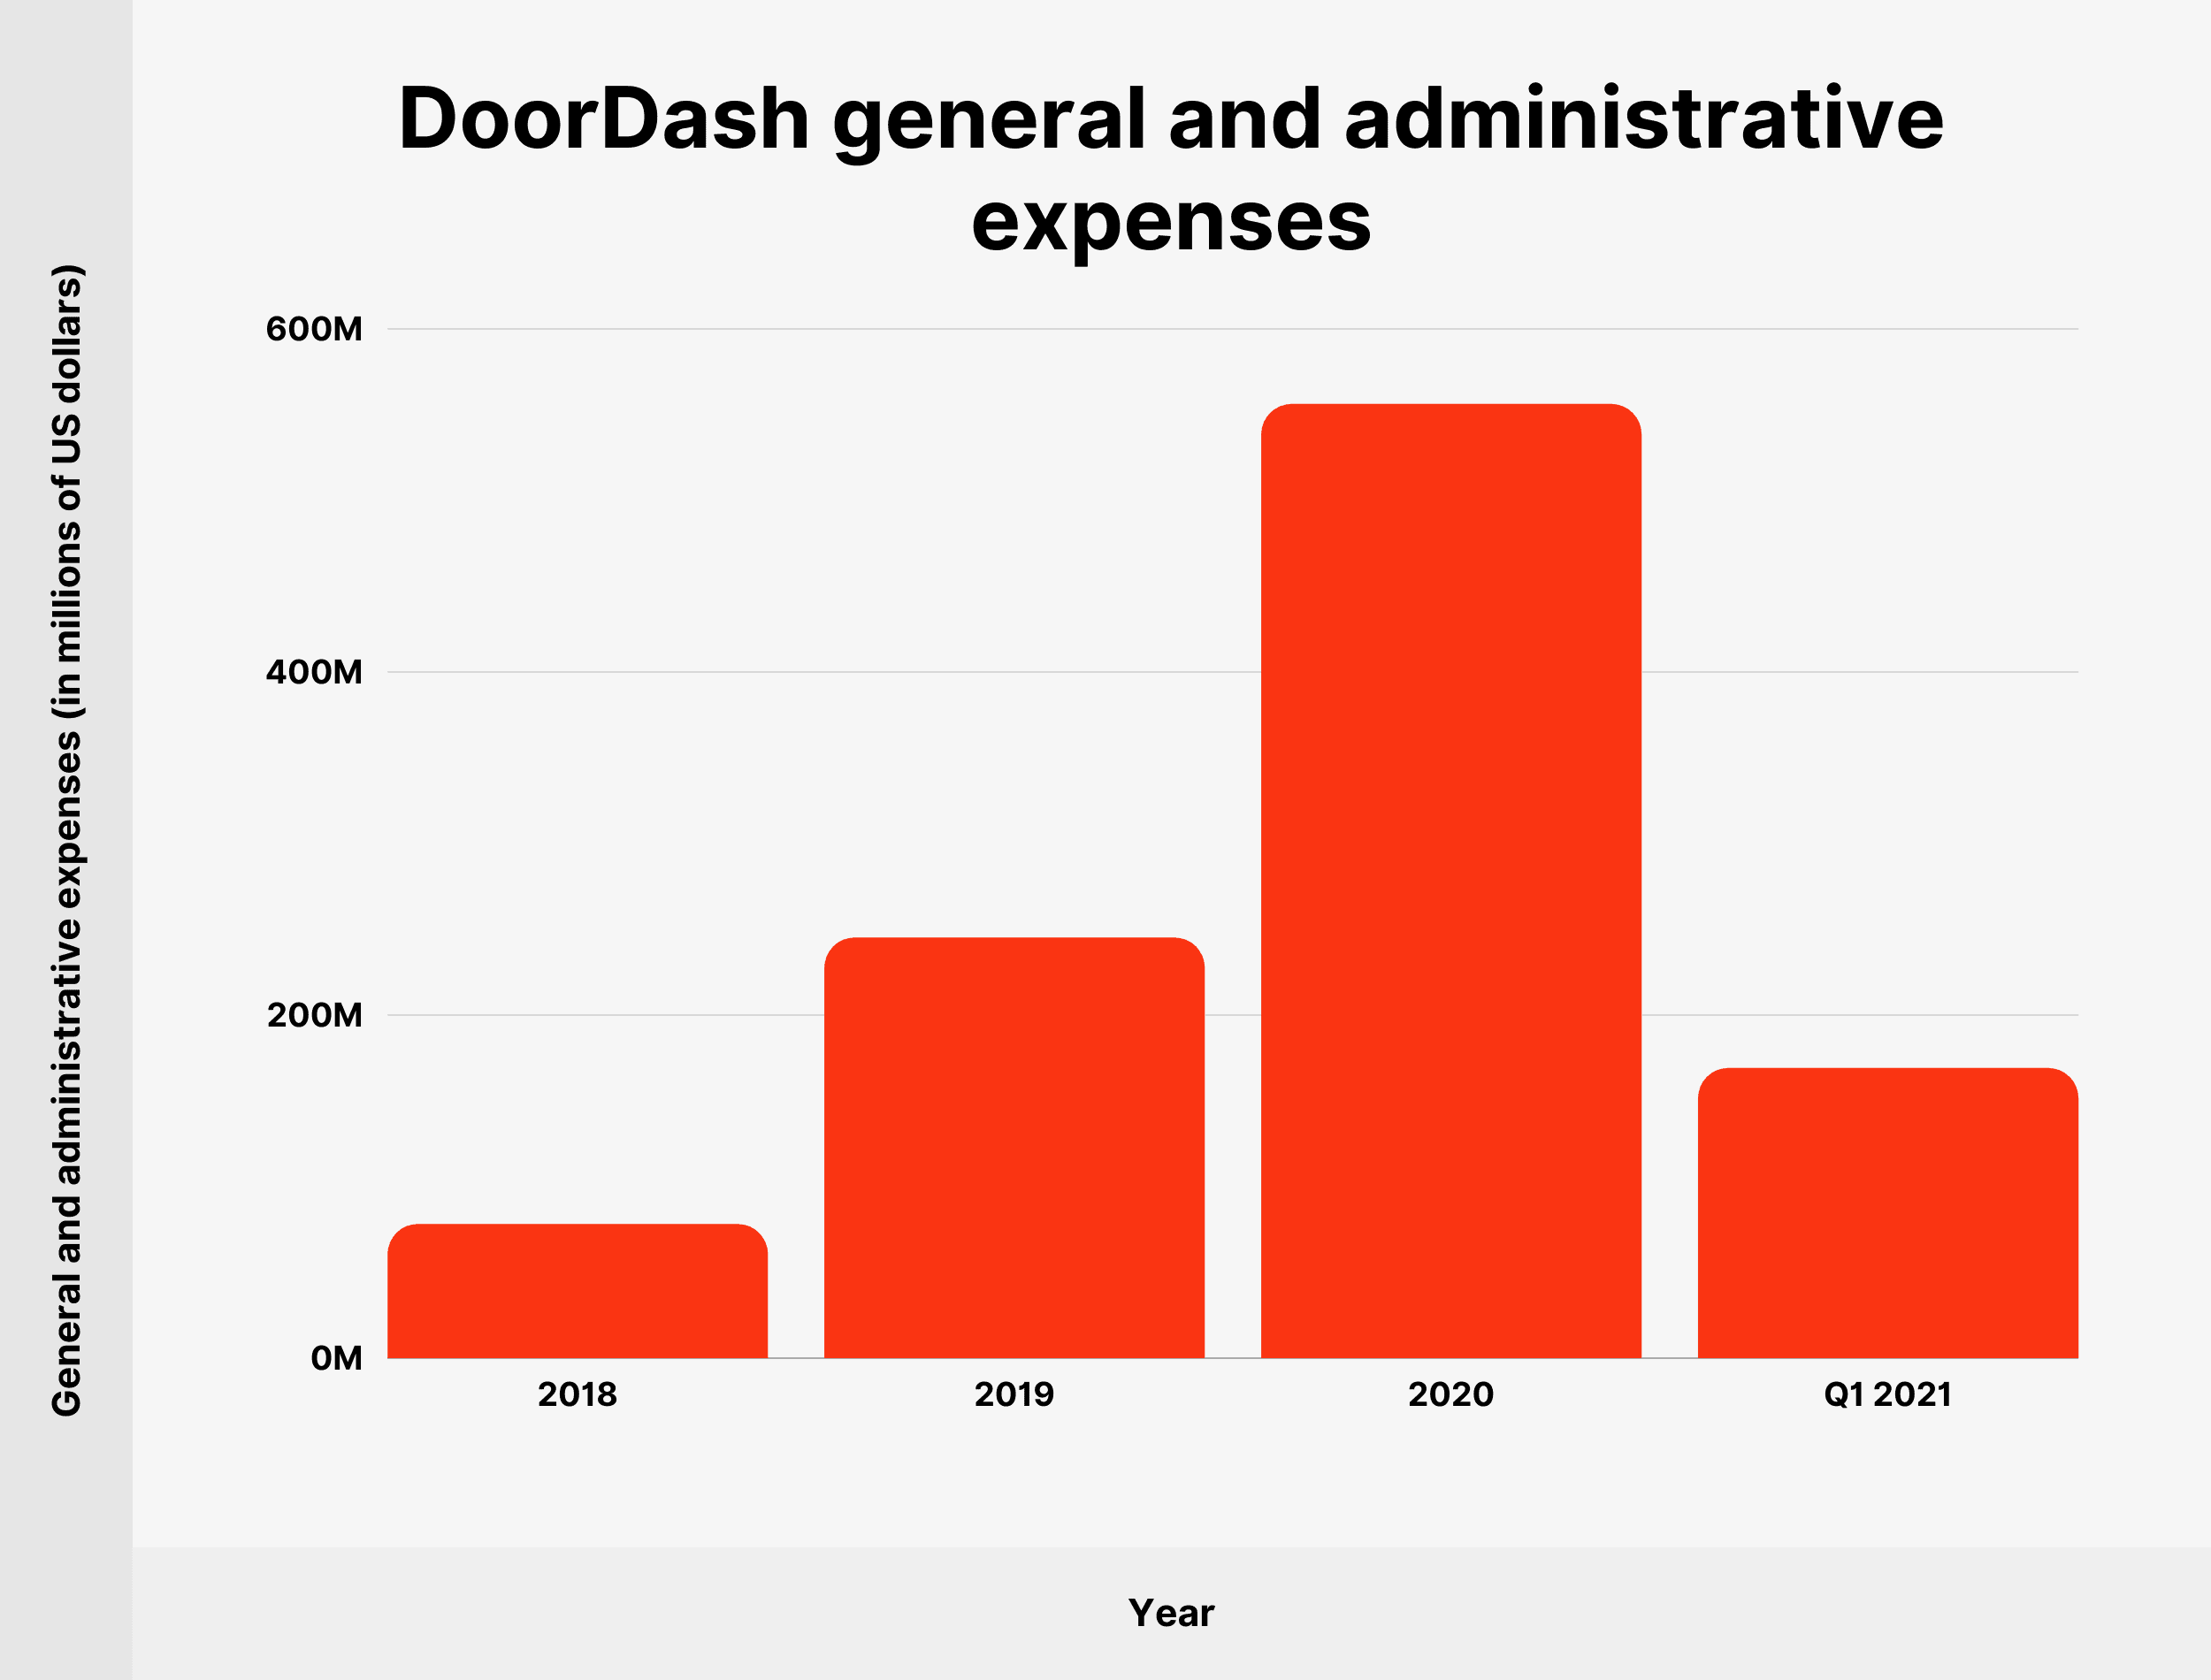 DoorDash general and administrative expenses